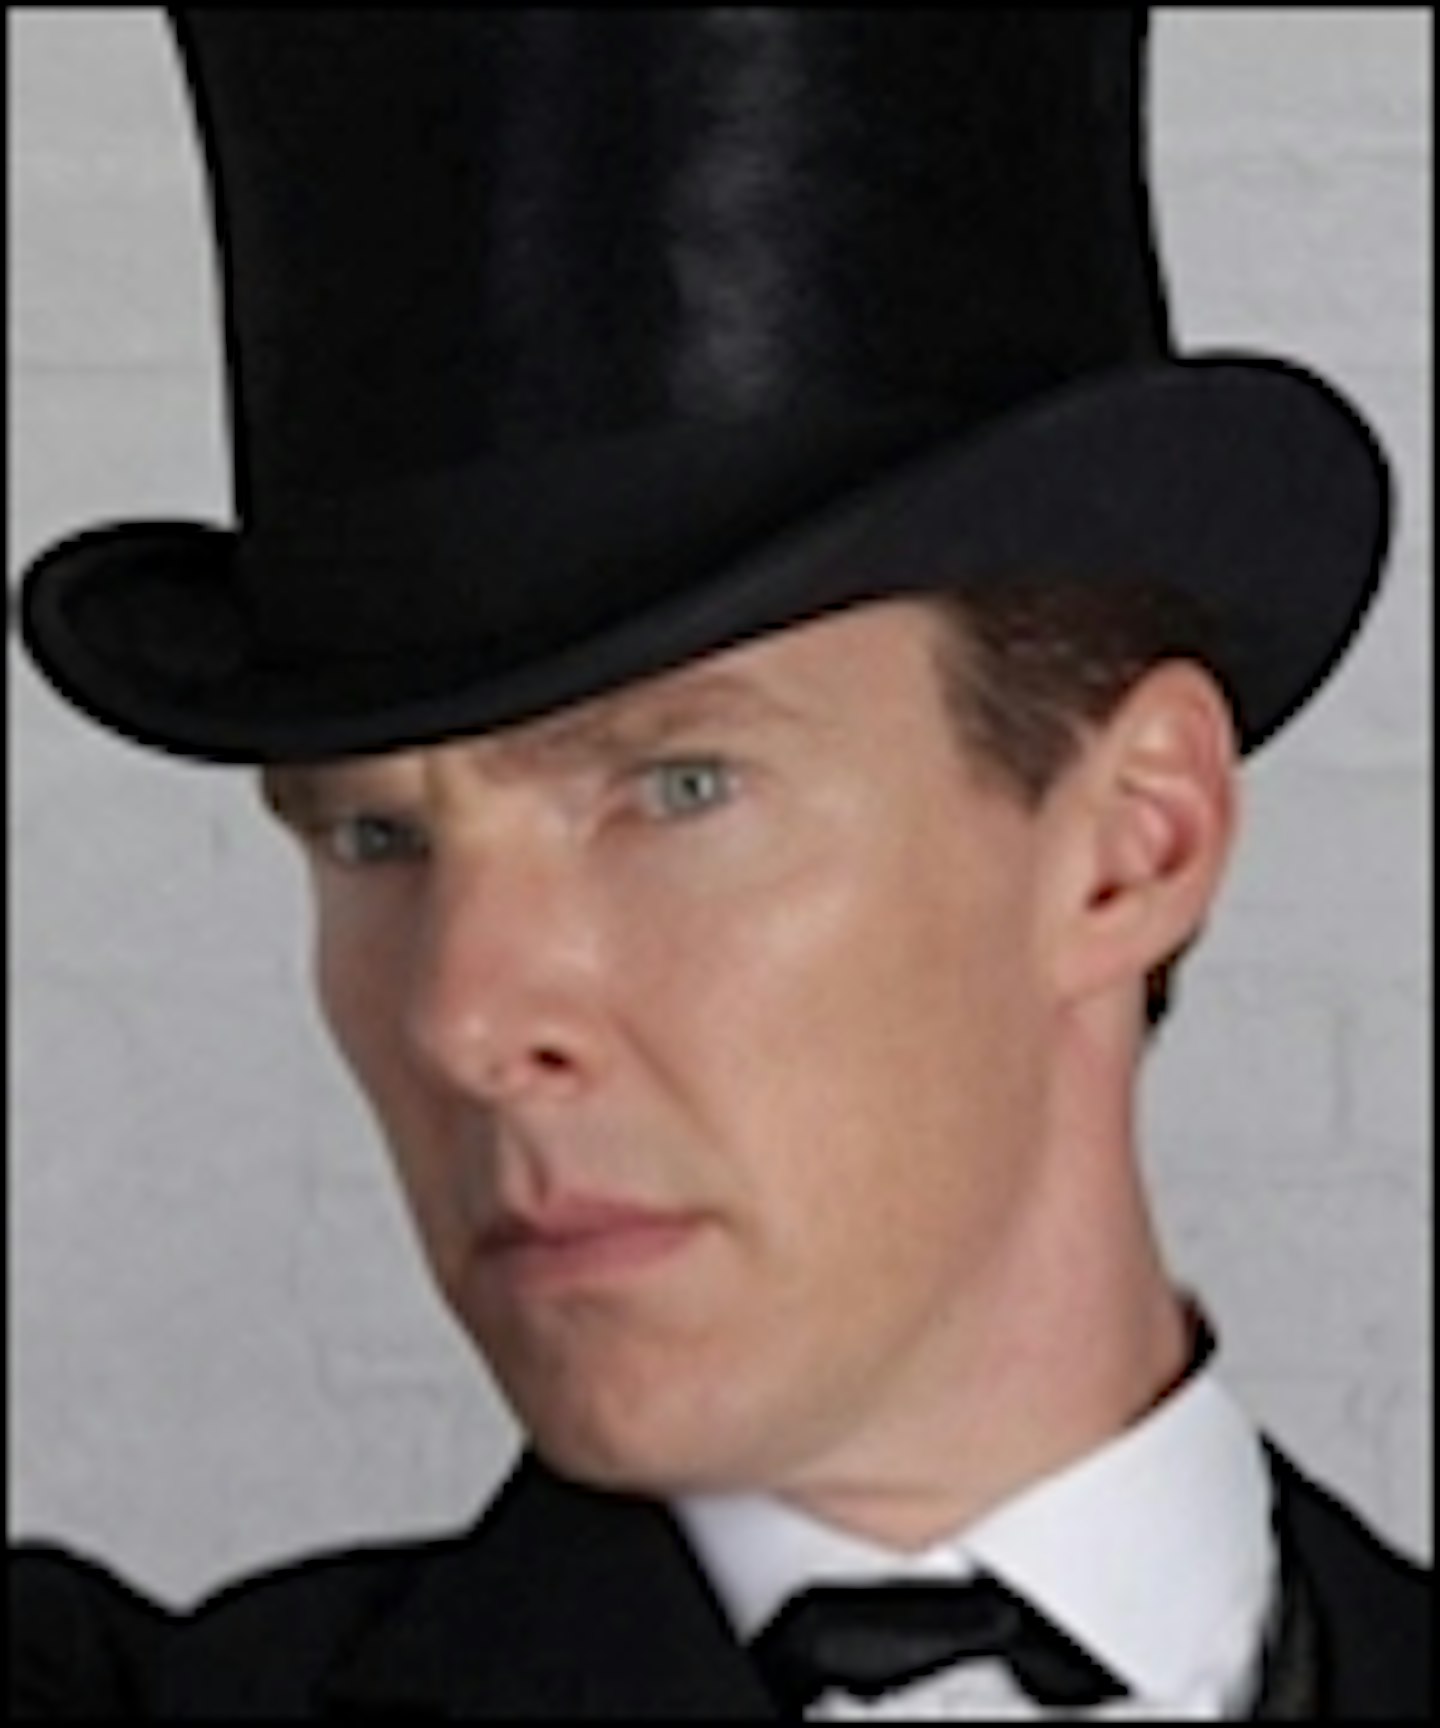 New Sherlock Image Released